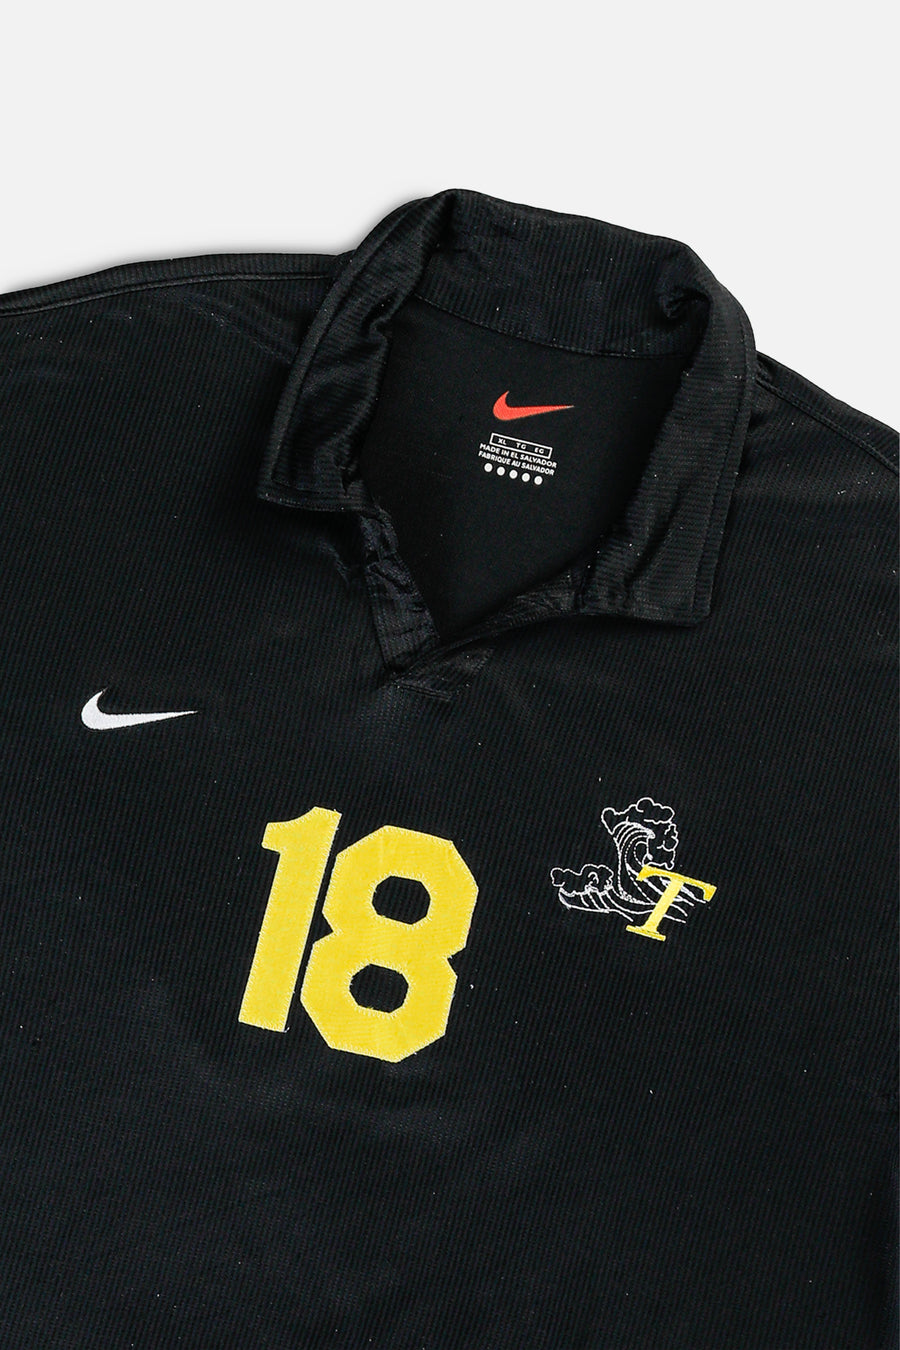 Nike Soccer Jersey - XL